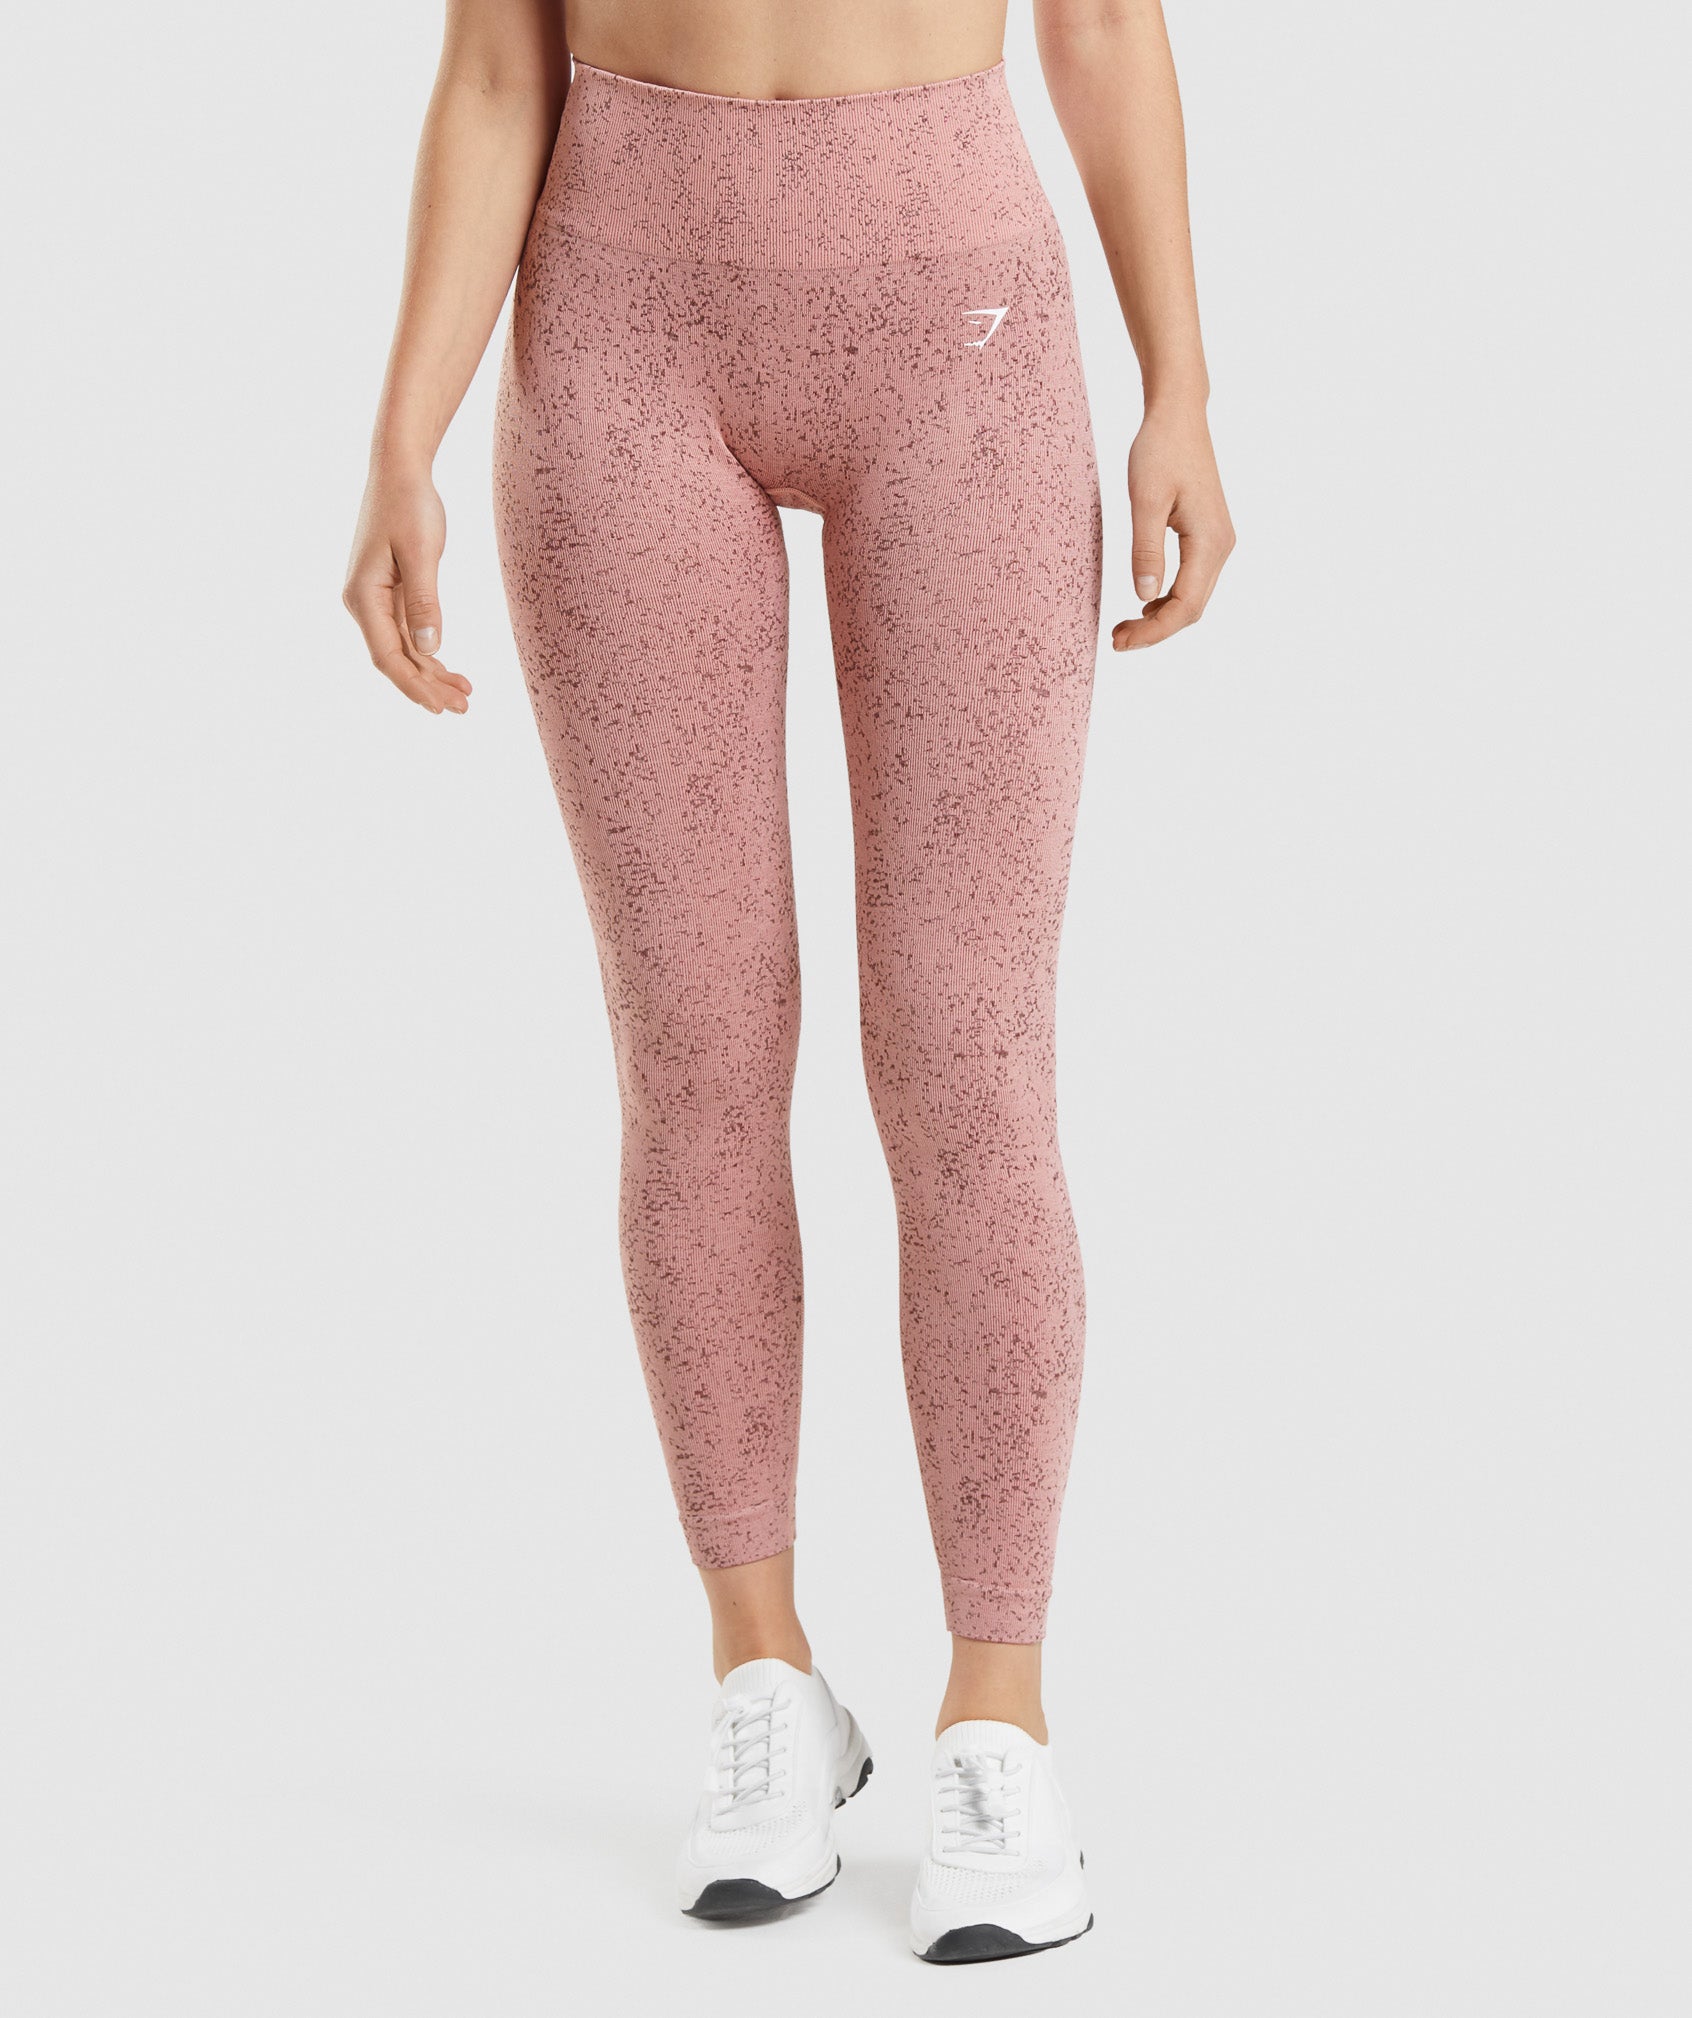 Gymshark Fit Dark Gray Pink Logo Band Seamless Legging Women's Size Small